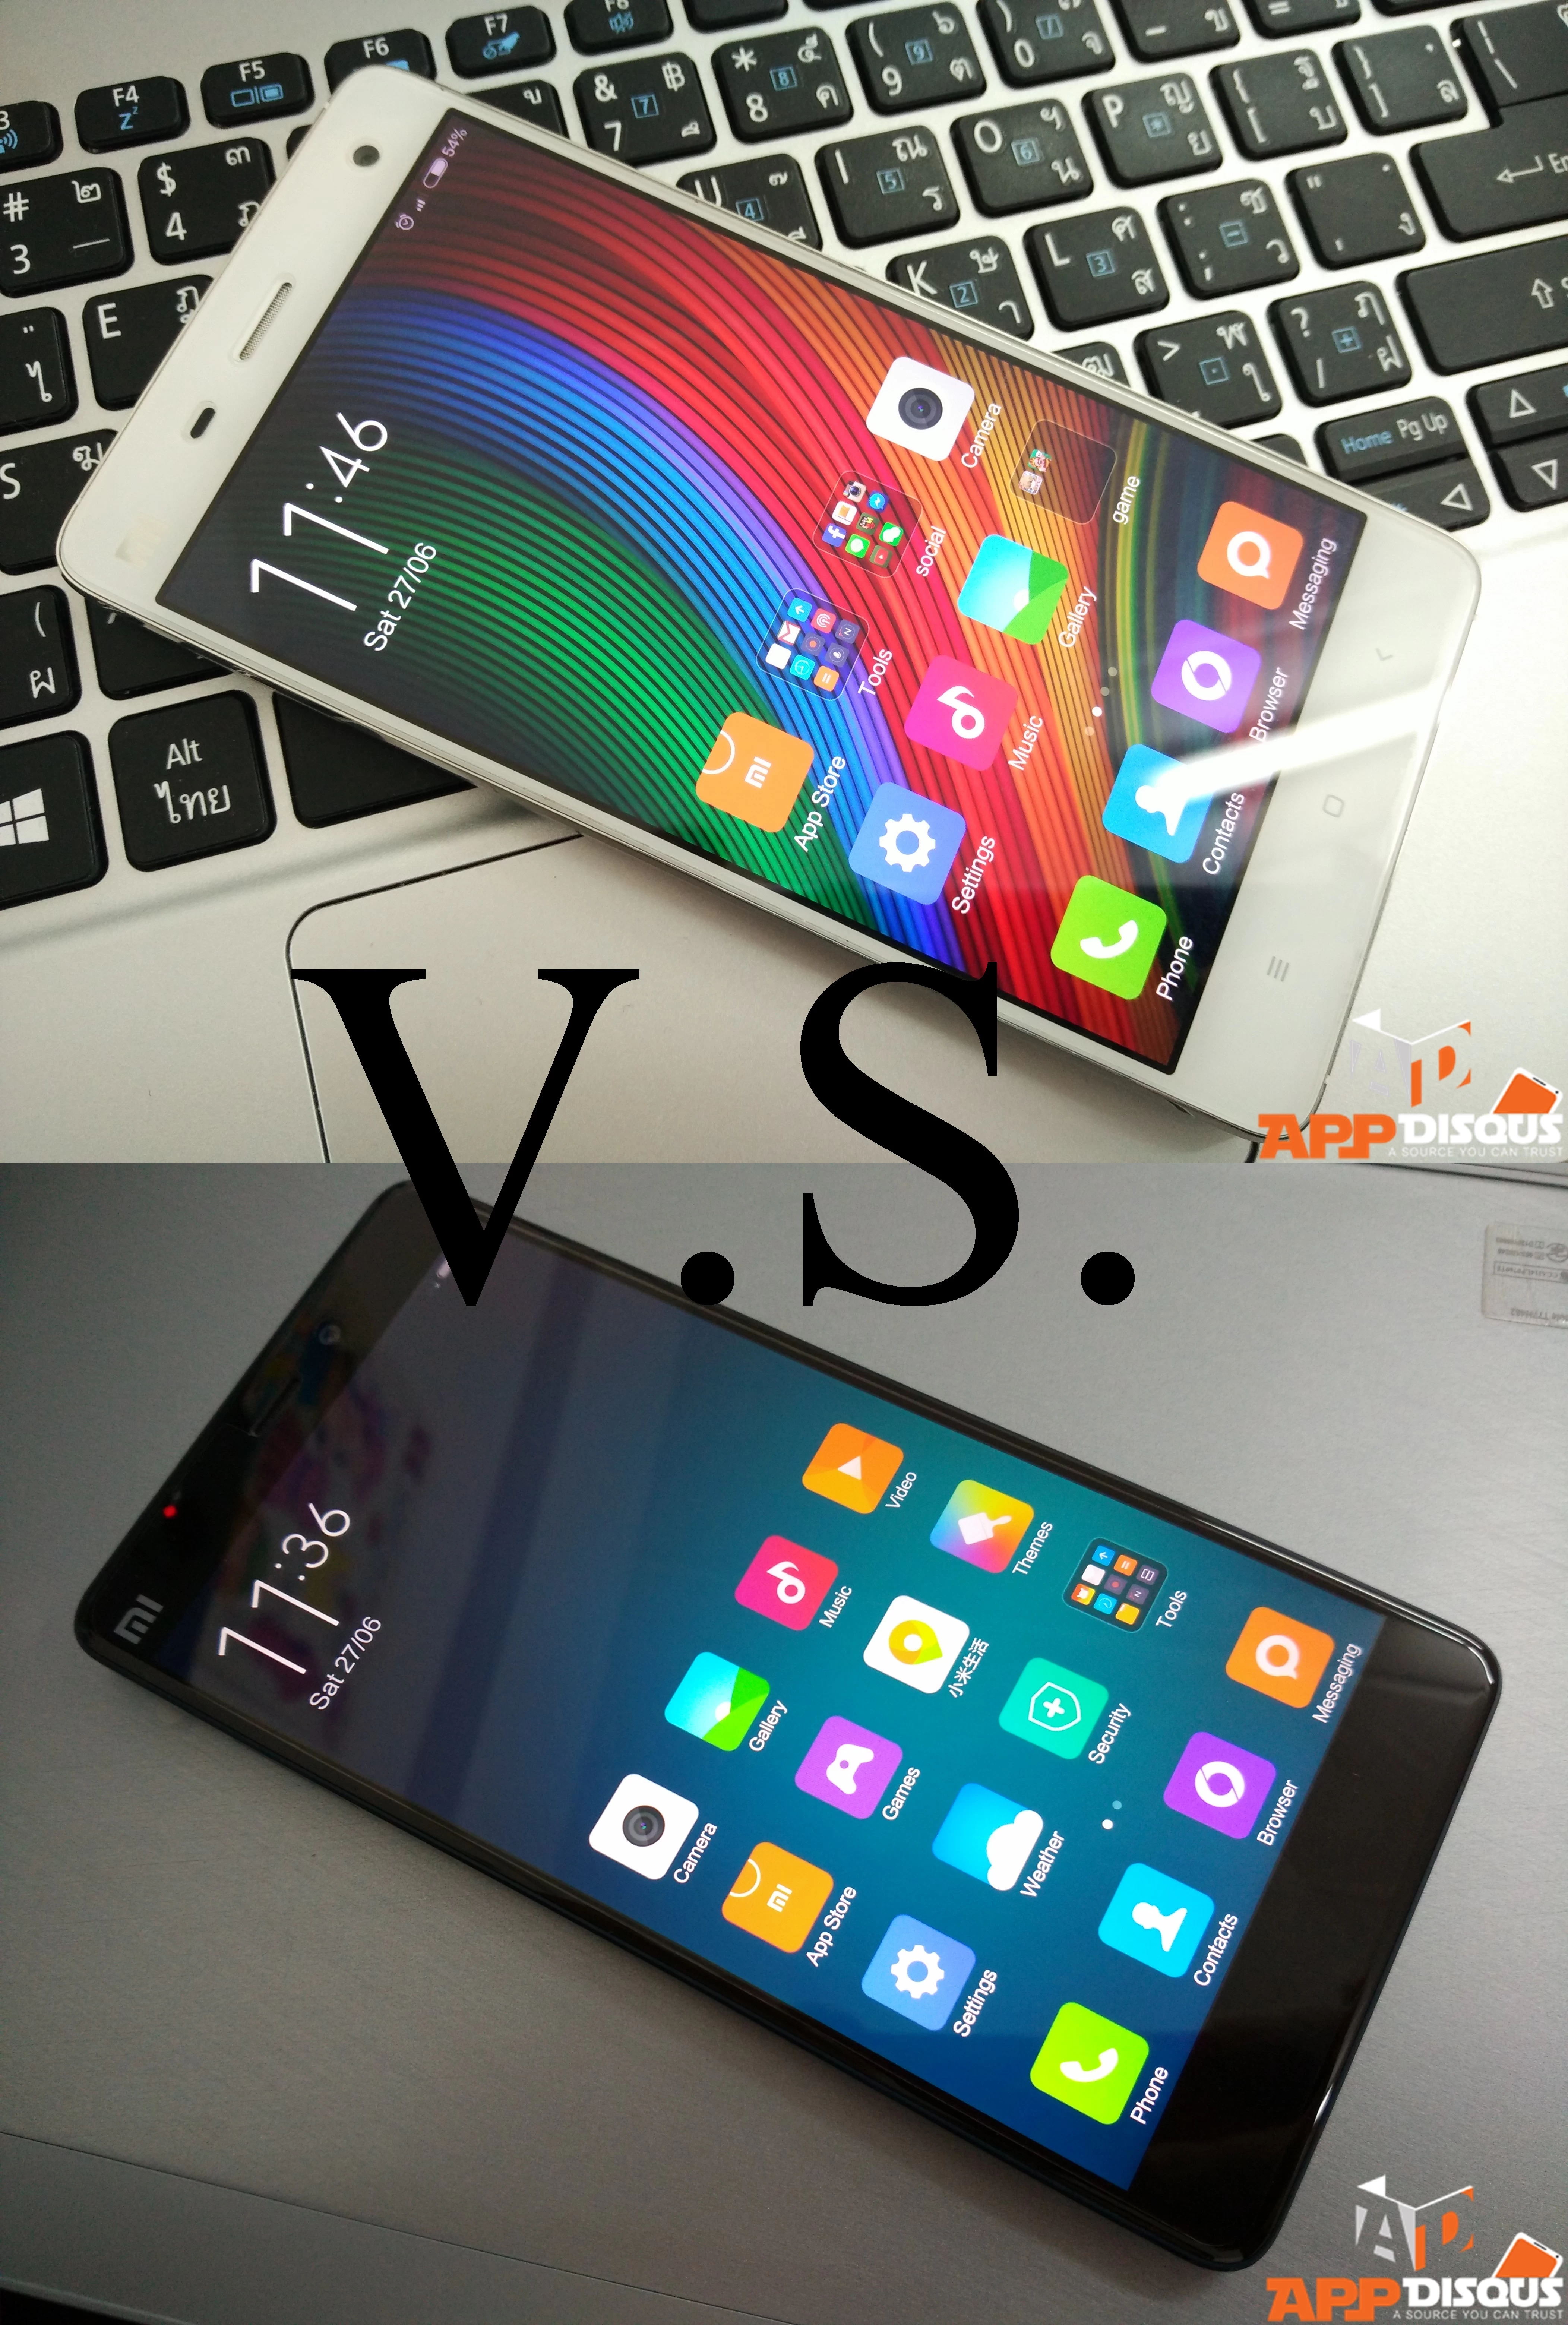 cats | Xiaomi | [เปรียบเทียบภาพถ่าย] ศึกสุดยอดกล้องแห่งแดนมังกร Xiaomi MI4 กับ Xiaomi MI Note ใช่ไม่ใช่ประชันกันที่ความชัด